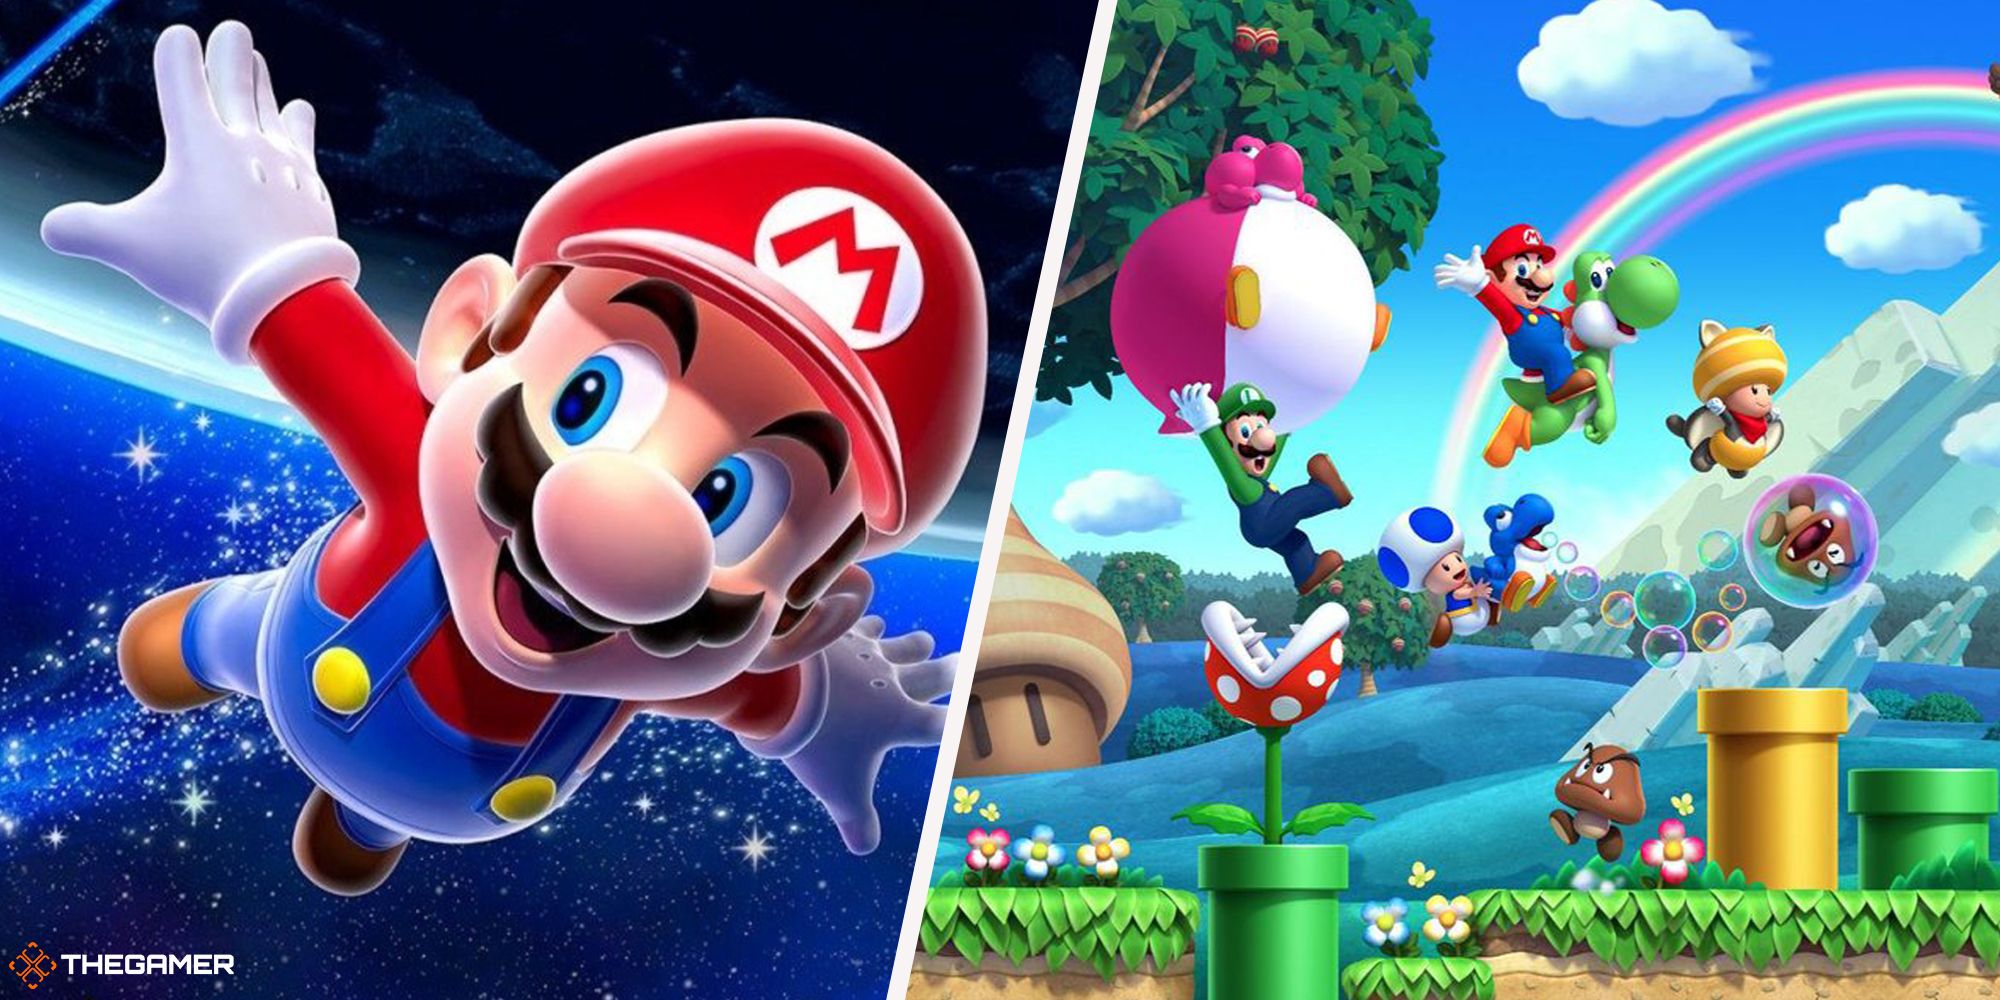 Top 10 Super Mario Flash Games! 